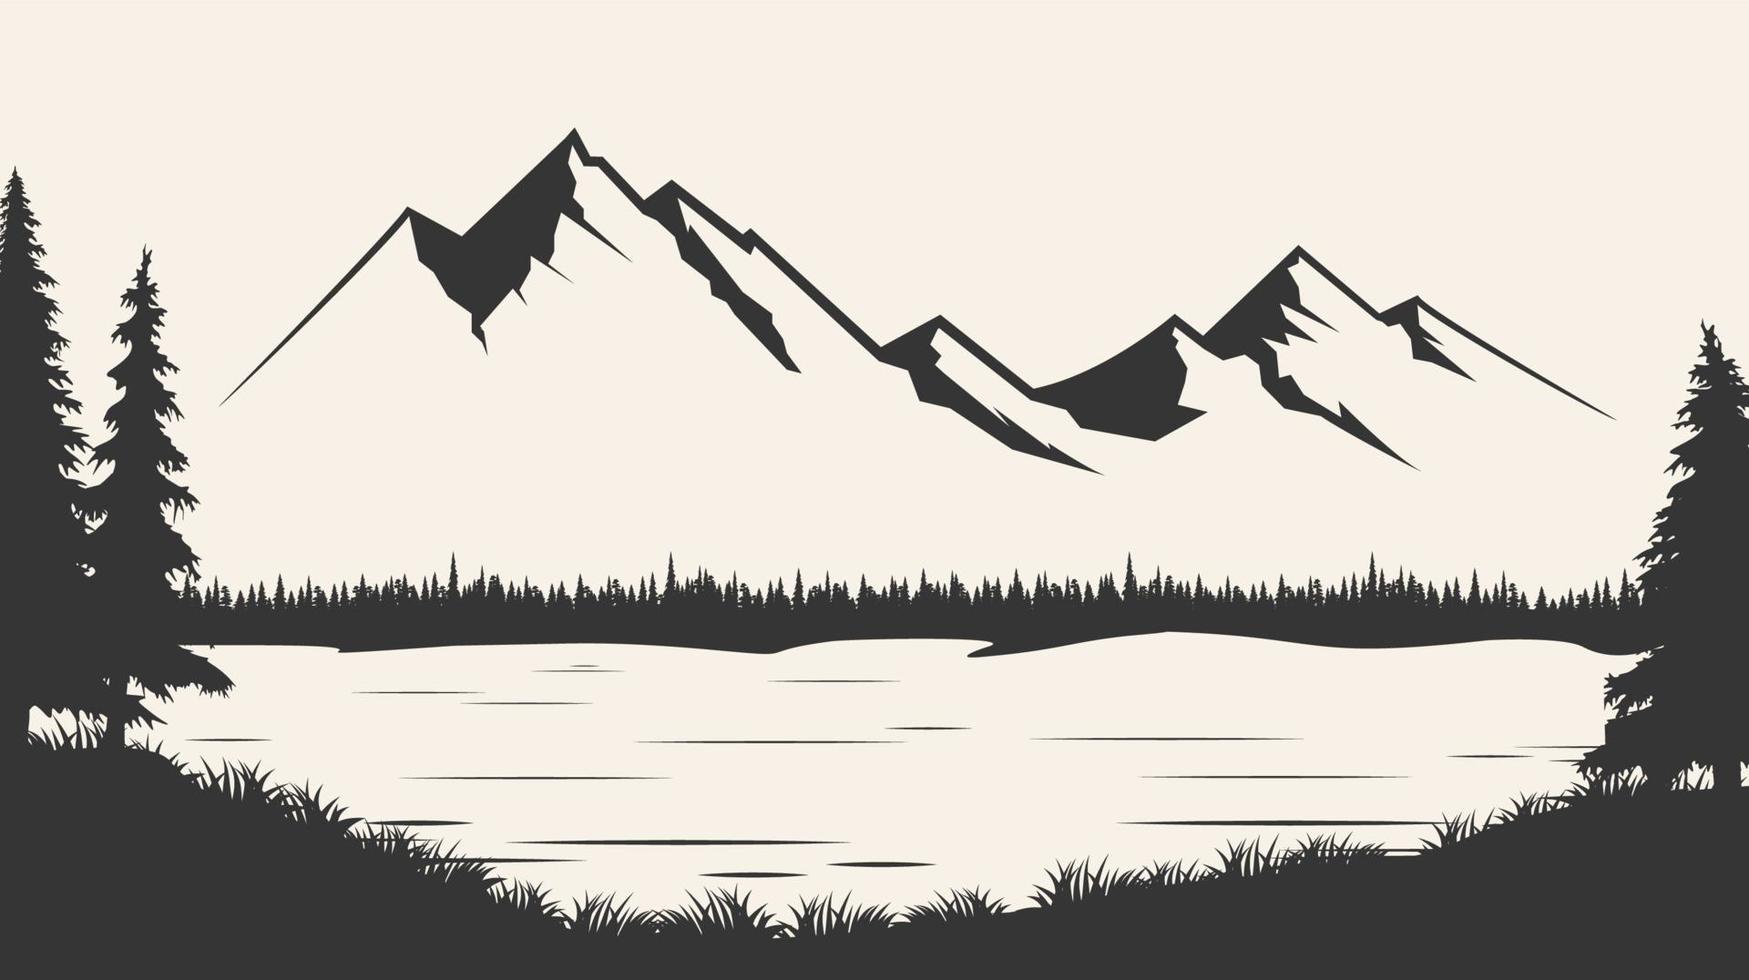 Mountains vector.Mountain range silhouette isolated vector illustration. Mountains silhouette